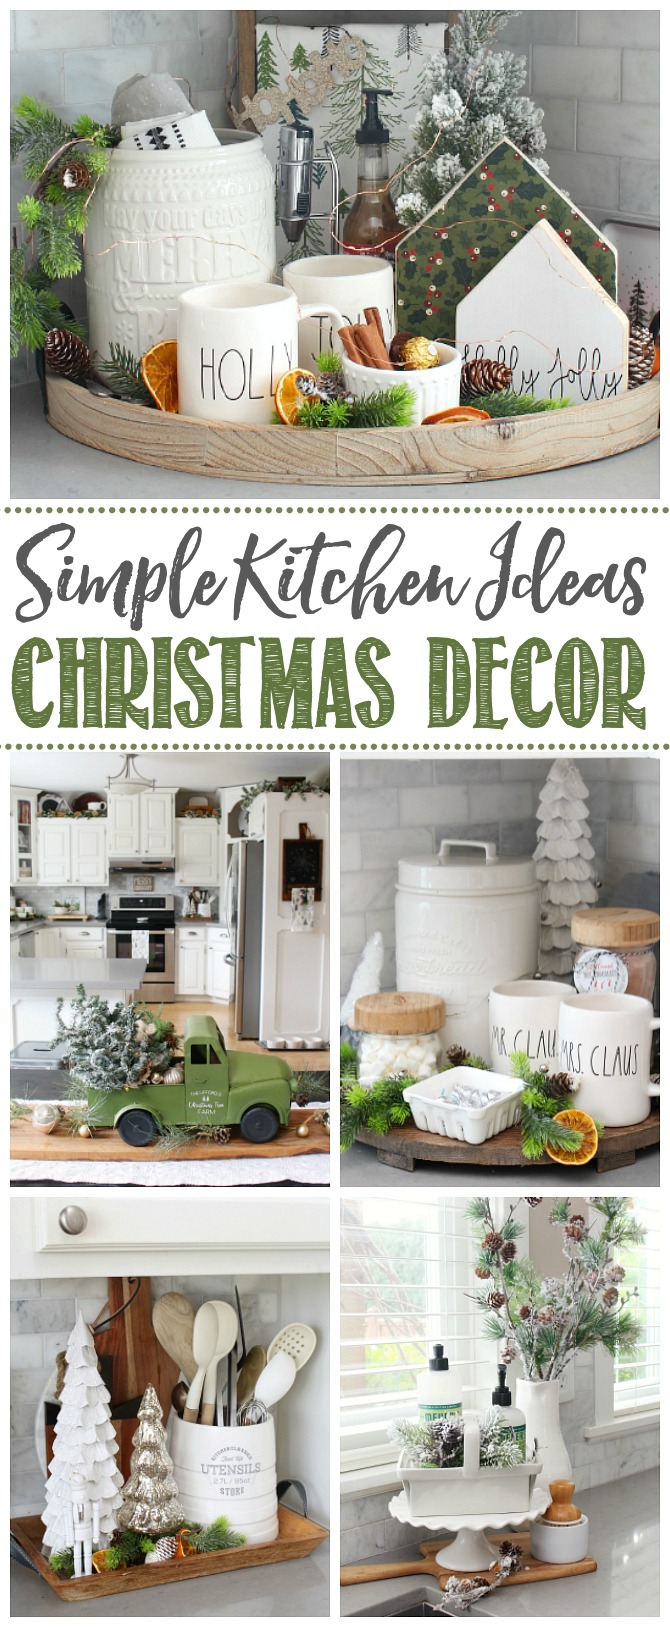 Collage of beautiful Christmas kitchen decor ideas.